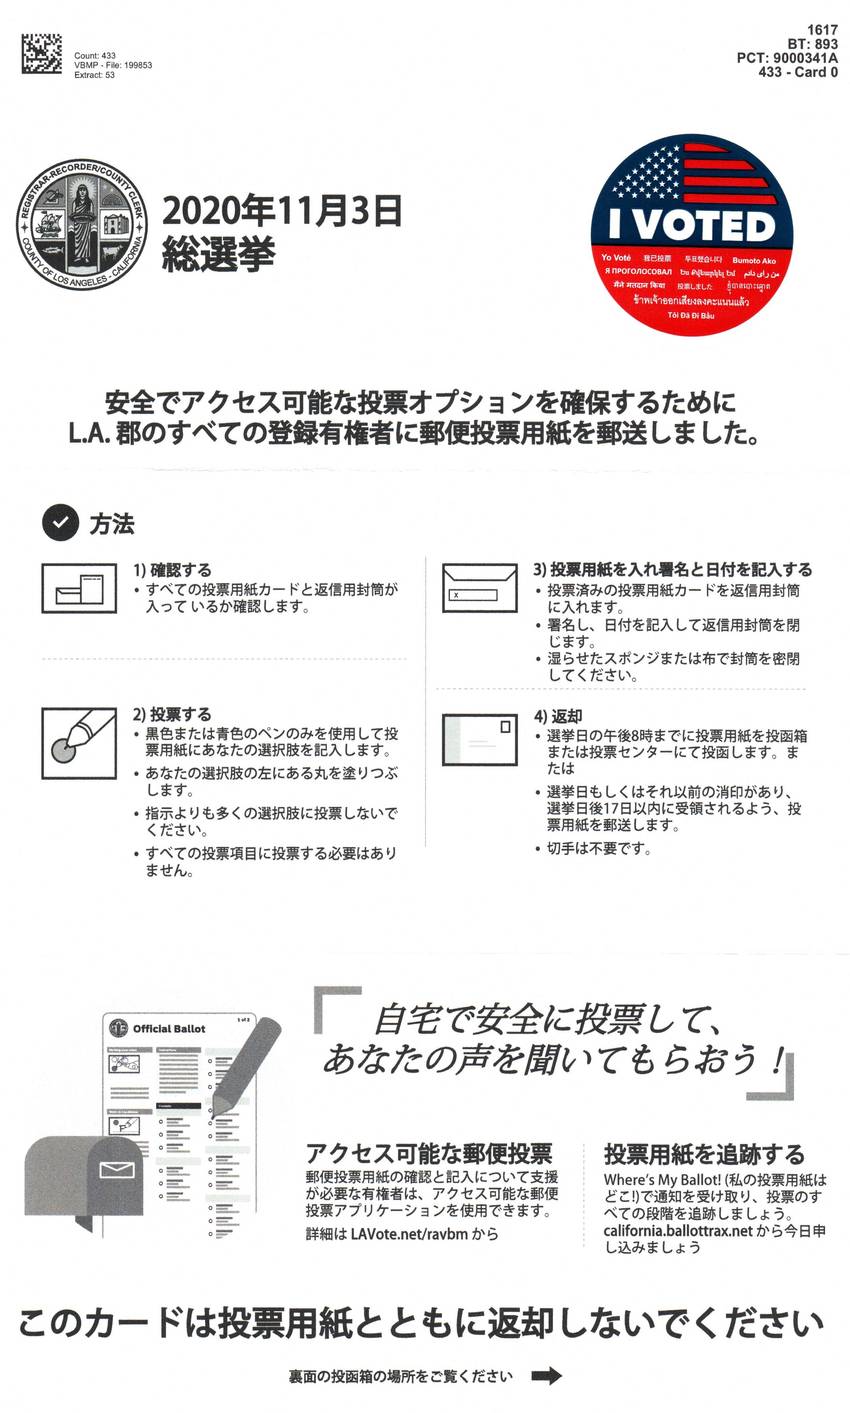 日本語の総選挙投票用紙